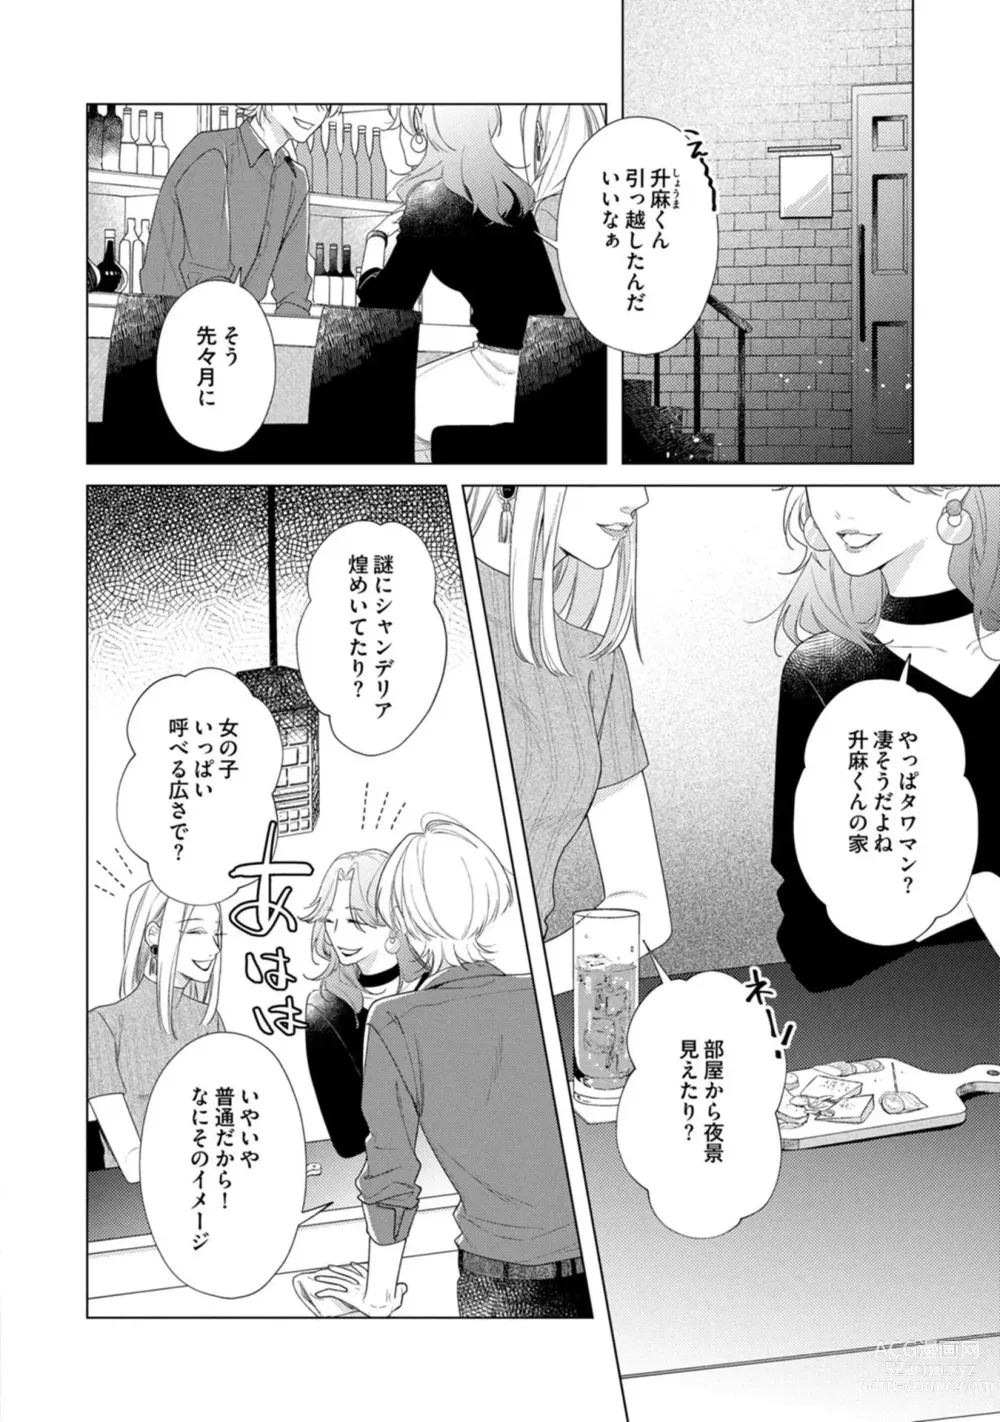 Page 4 of manga Yoru mo, Asa mo